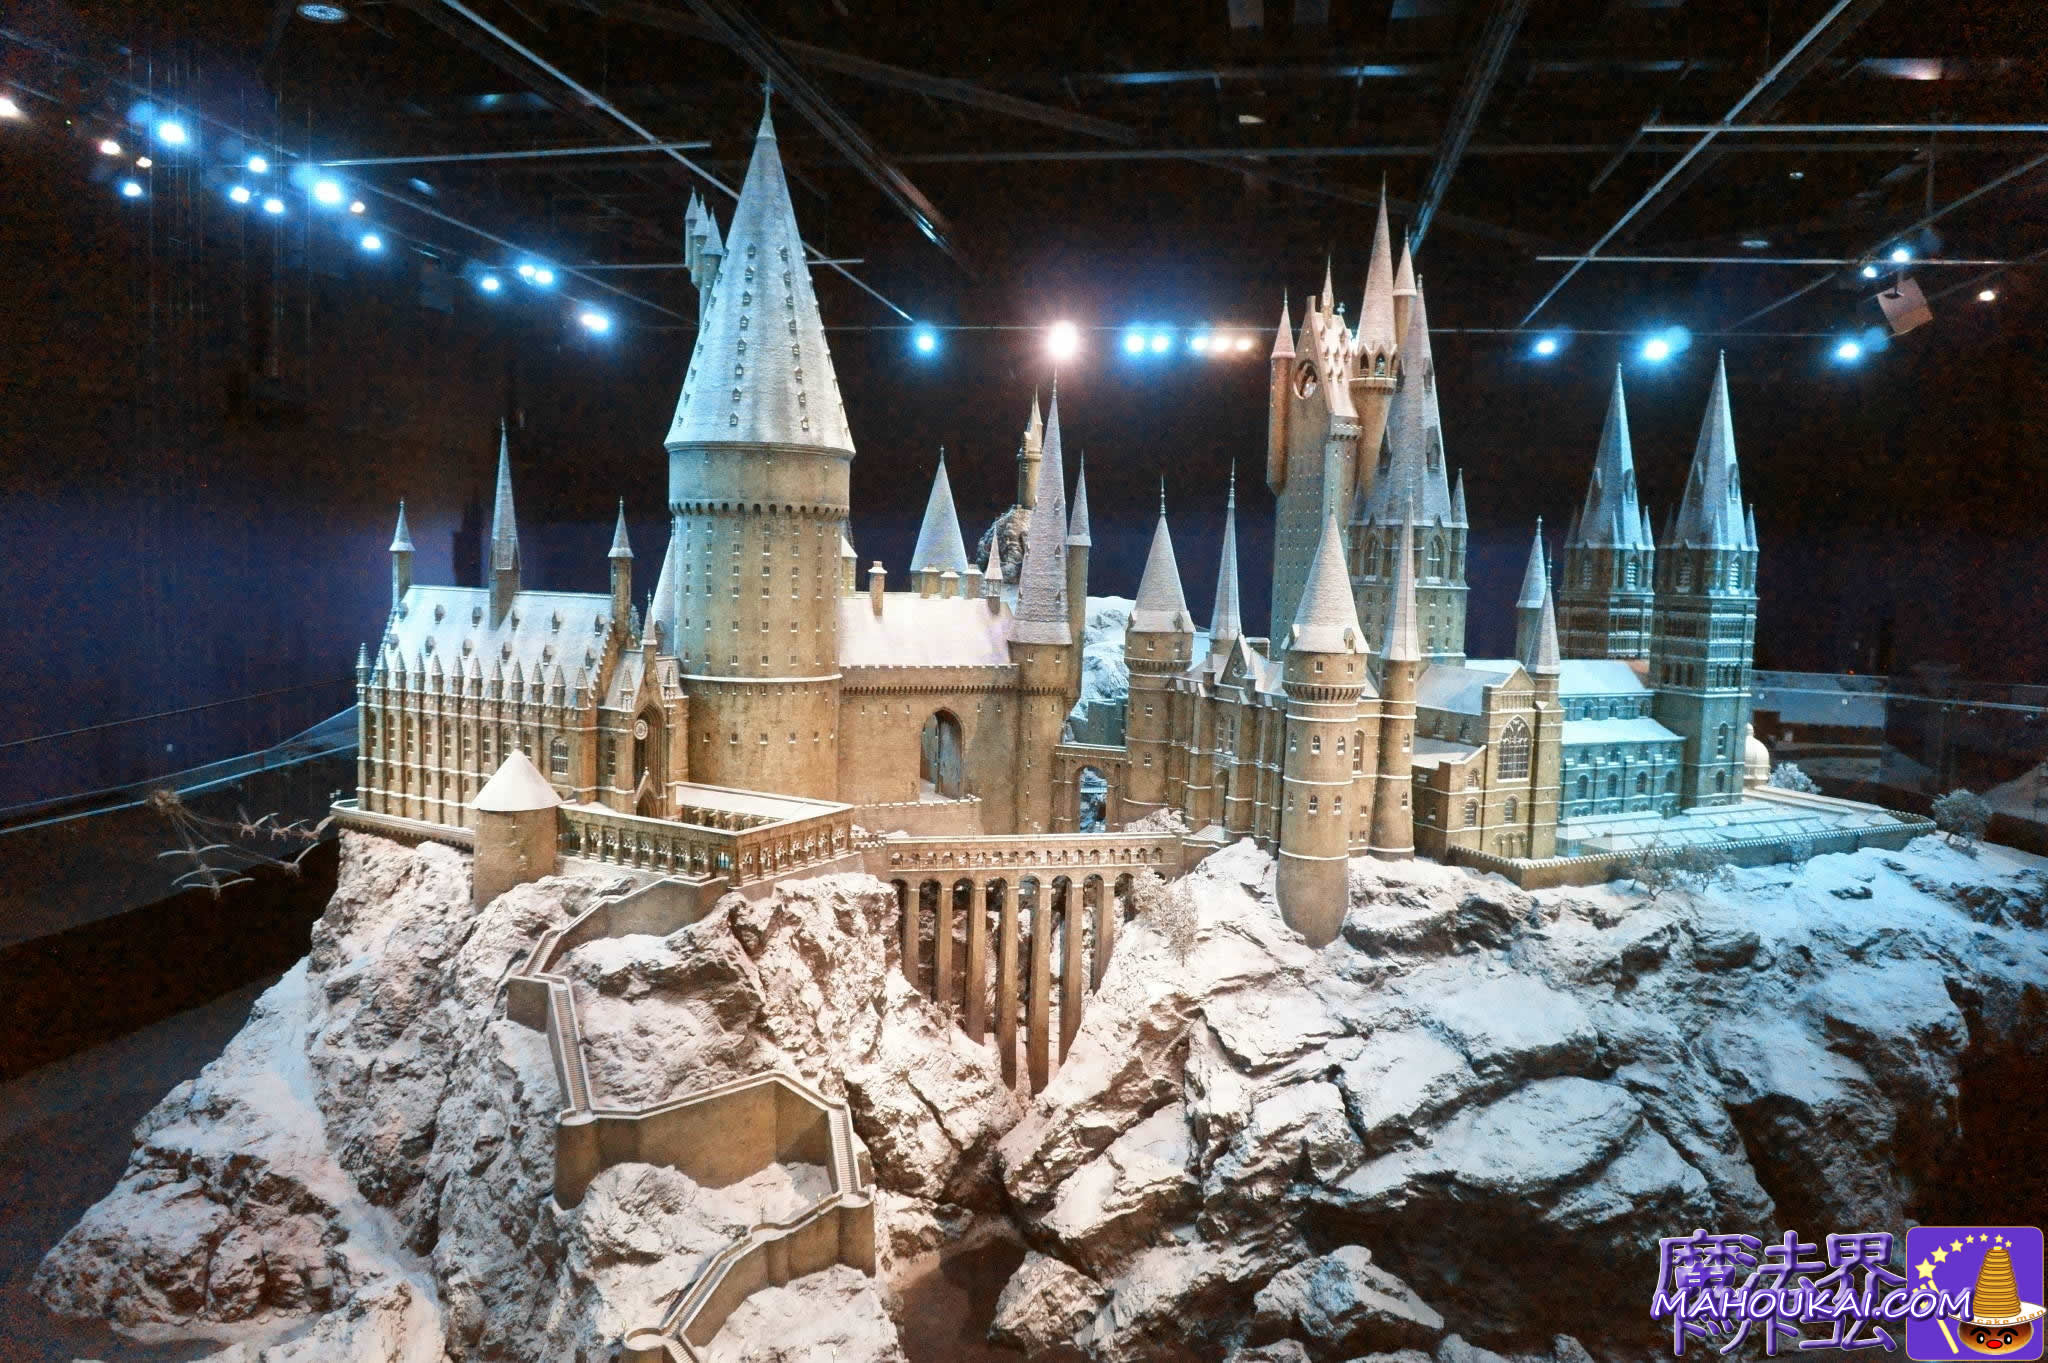 Giant Hogwarts castle (Hogwarts castle model) miniature model front, from 2nd floor.